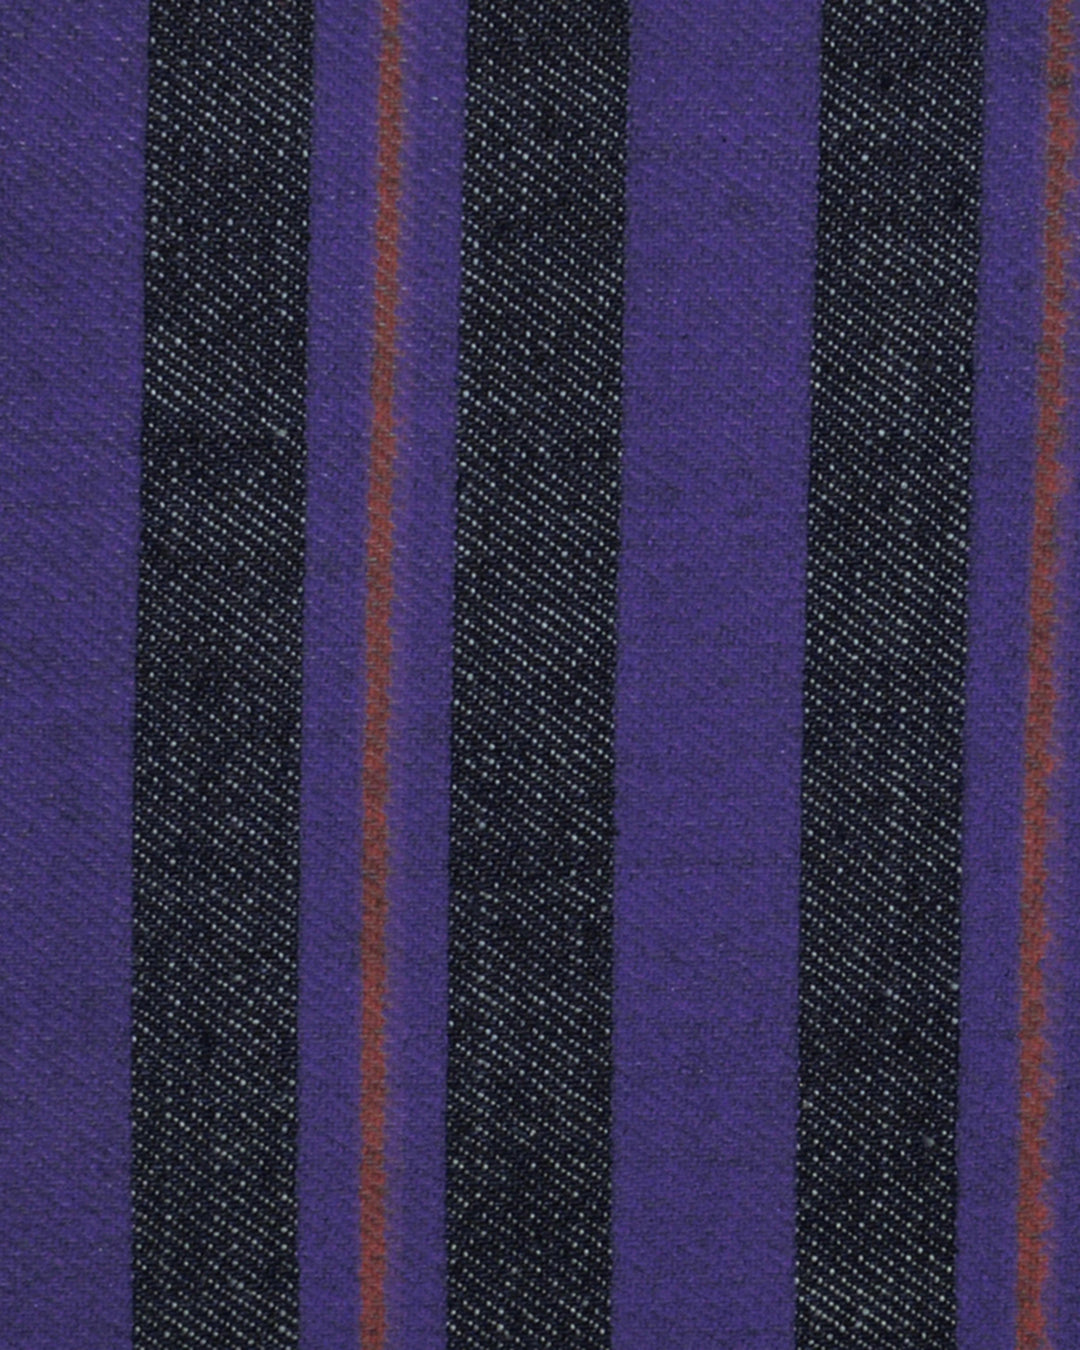 Purple Stripes On Indigo Denim